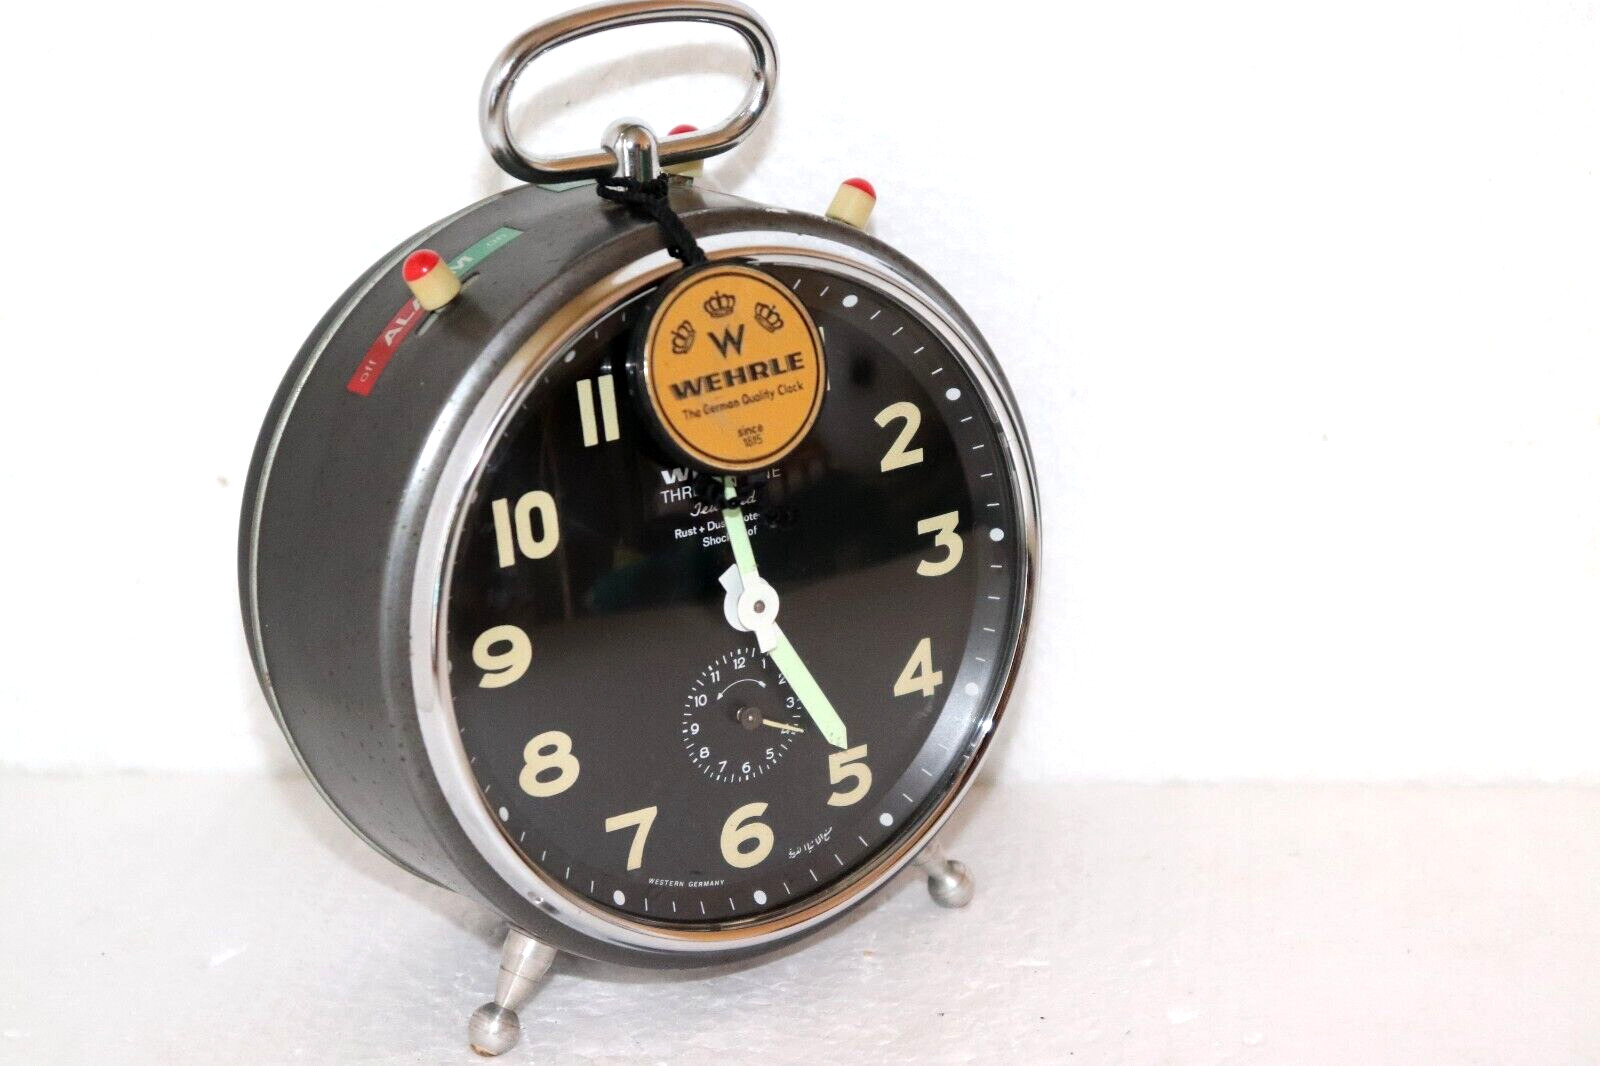 Vintage WEHrle Three In One Mechanical Alarm Clock Made In Germany 1960.